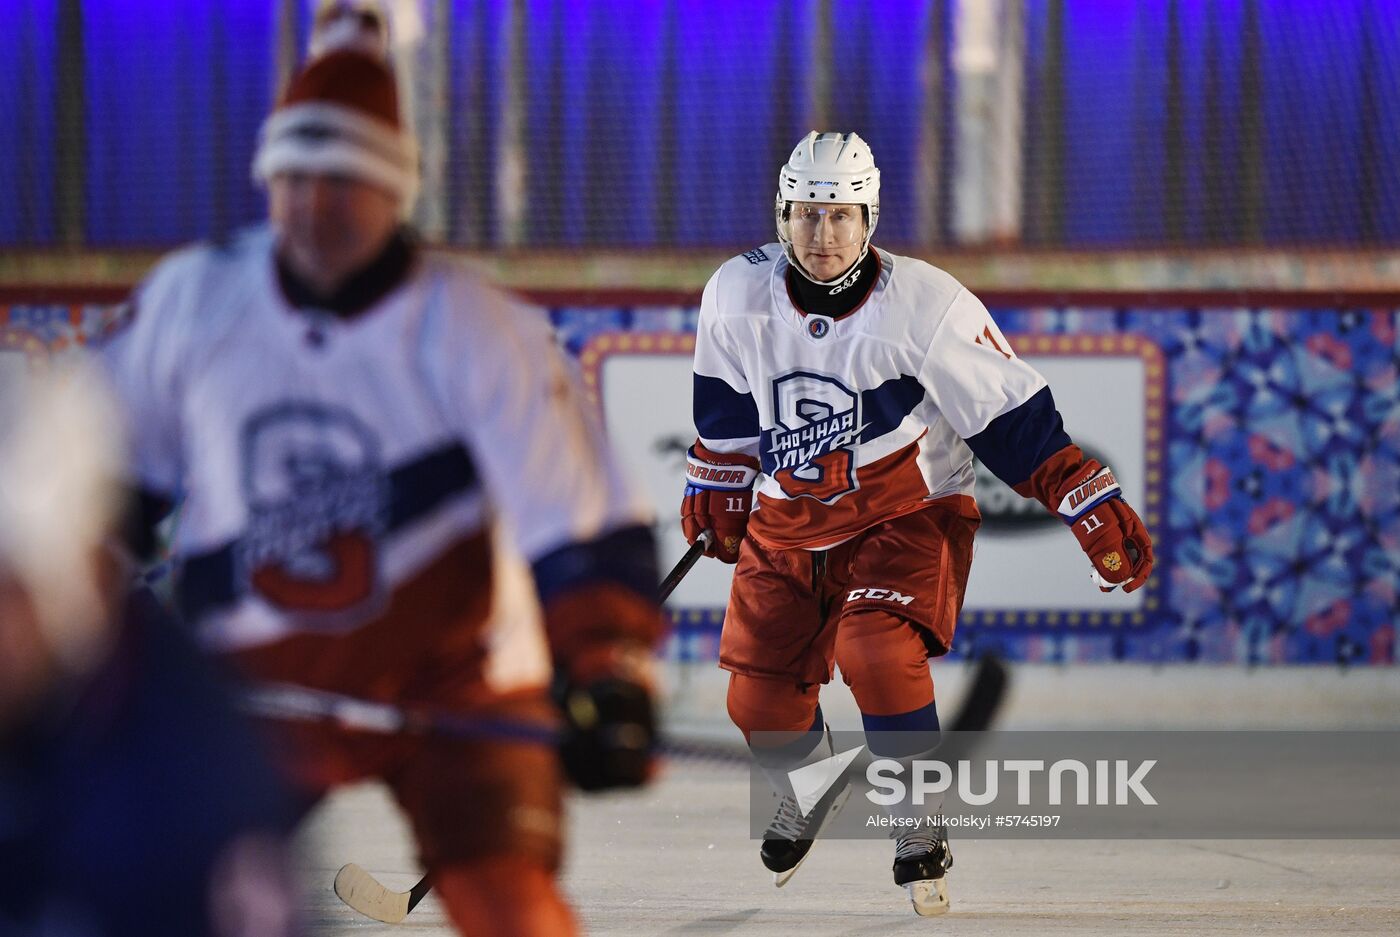 President Putin plays ice hockey match in Night Hockey League